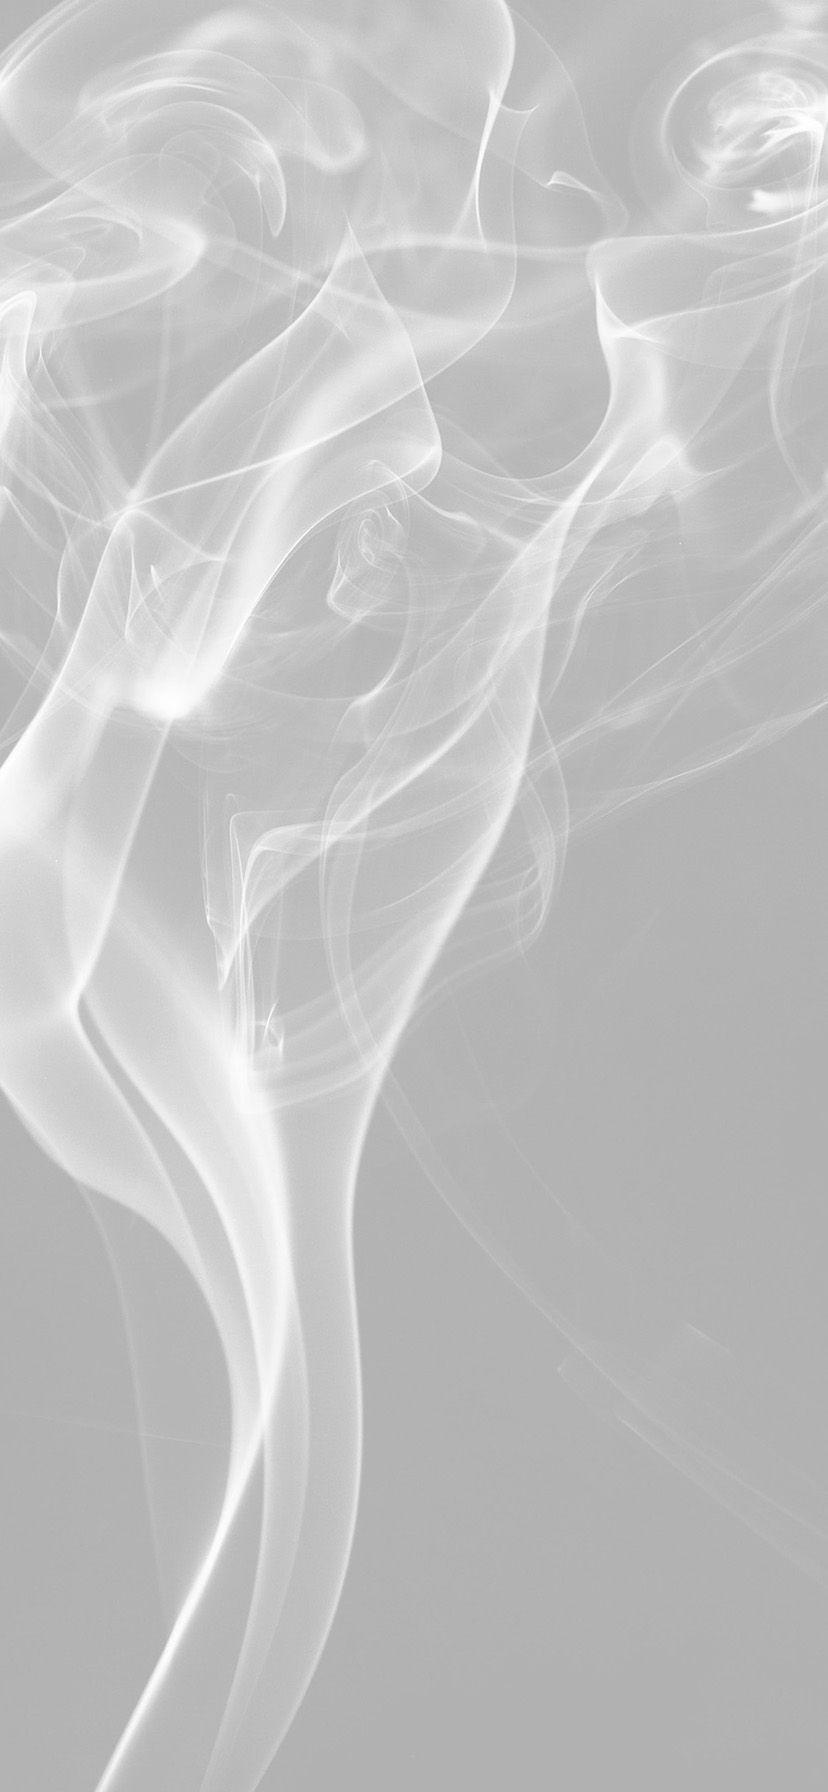 HDiPhoneWalls vi51 smoky gray bw texture smoke hazy design iPhone XR